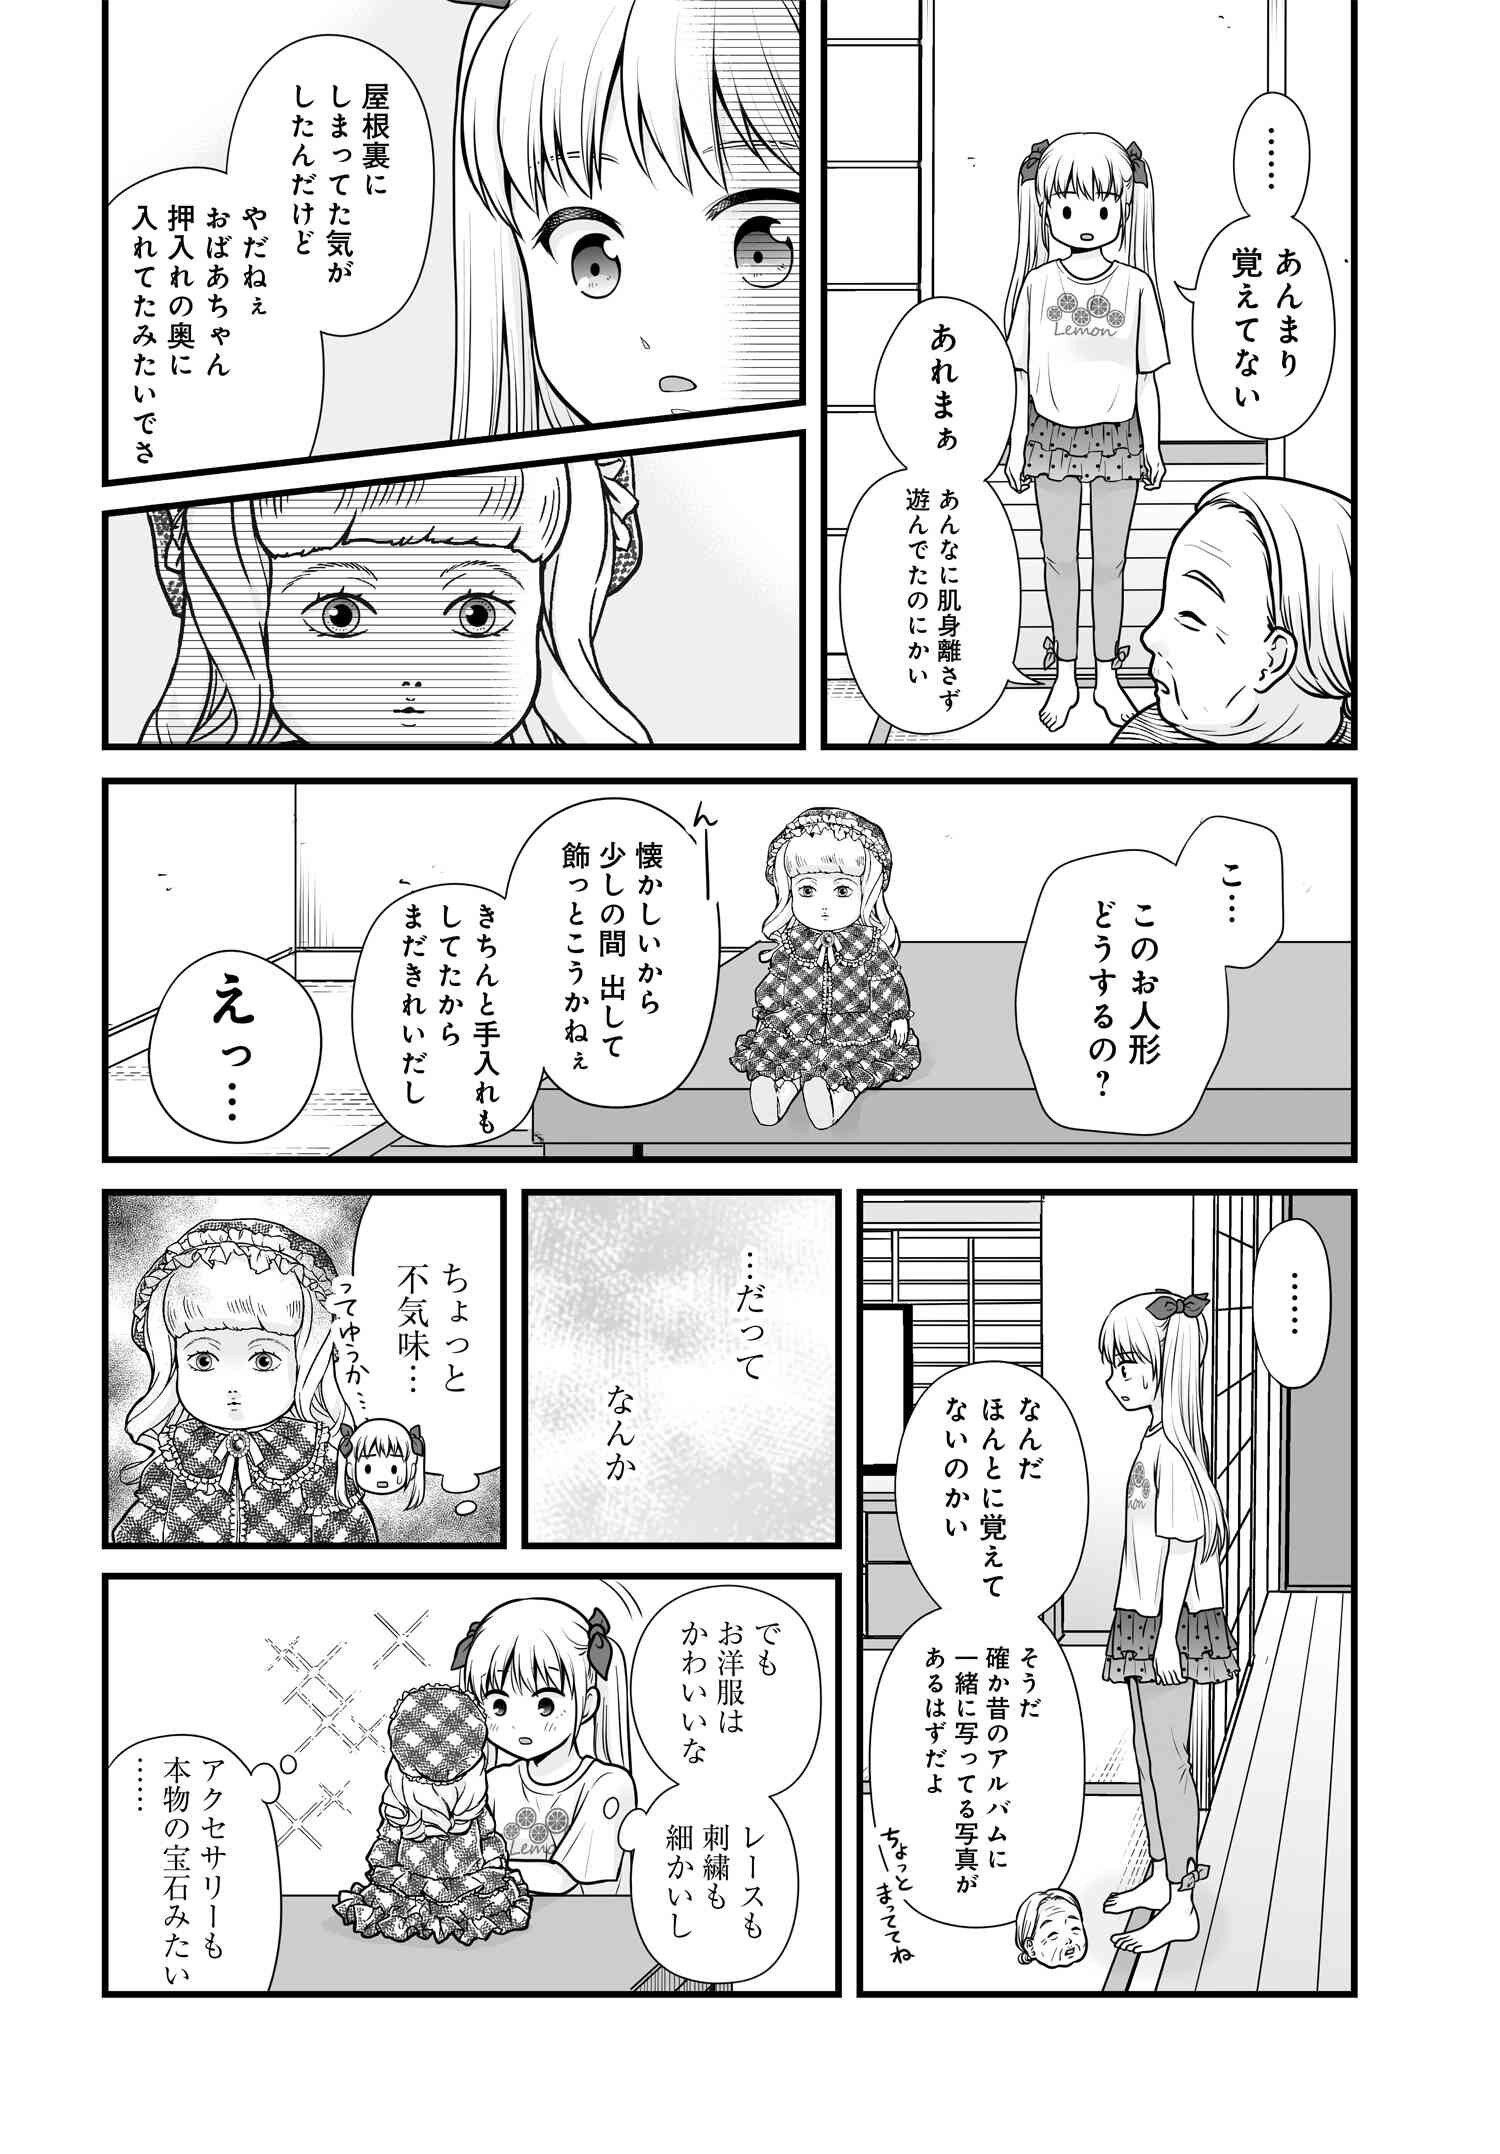 Joshikousei no Mudazukai - Chapter 102 - Page 3